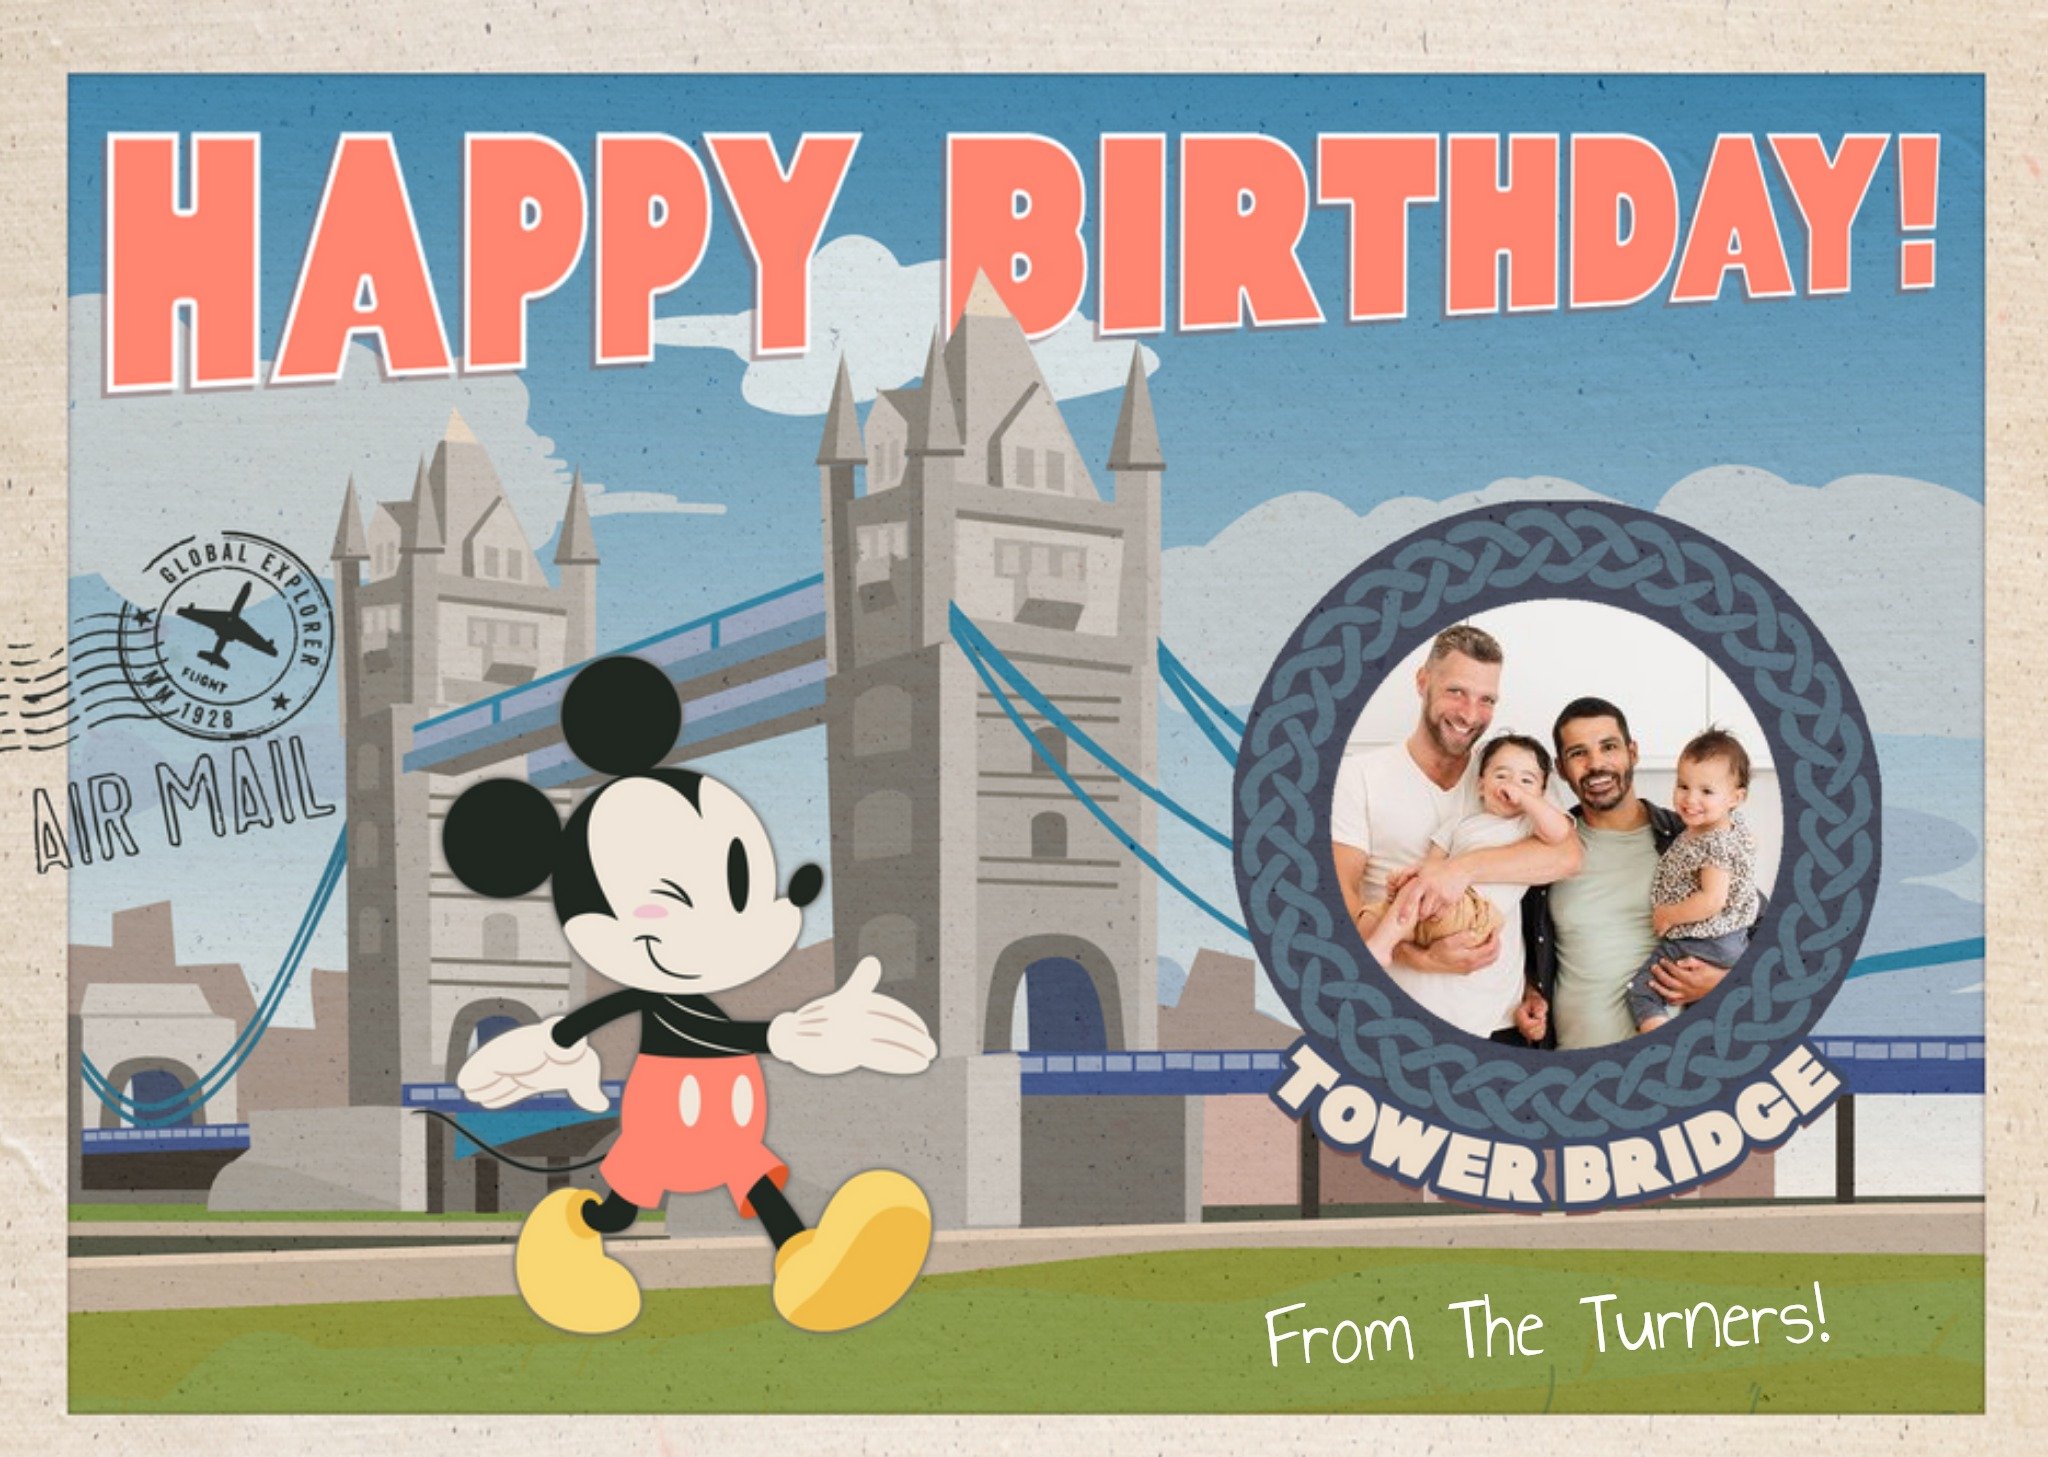 Mickey Mouse Tower Bridge London Photo Upload Birthday Card By Disney, Large